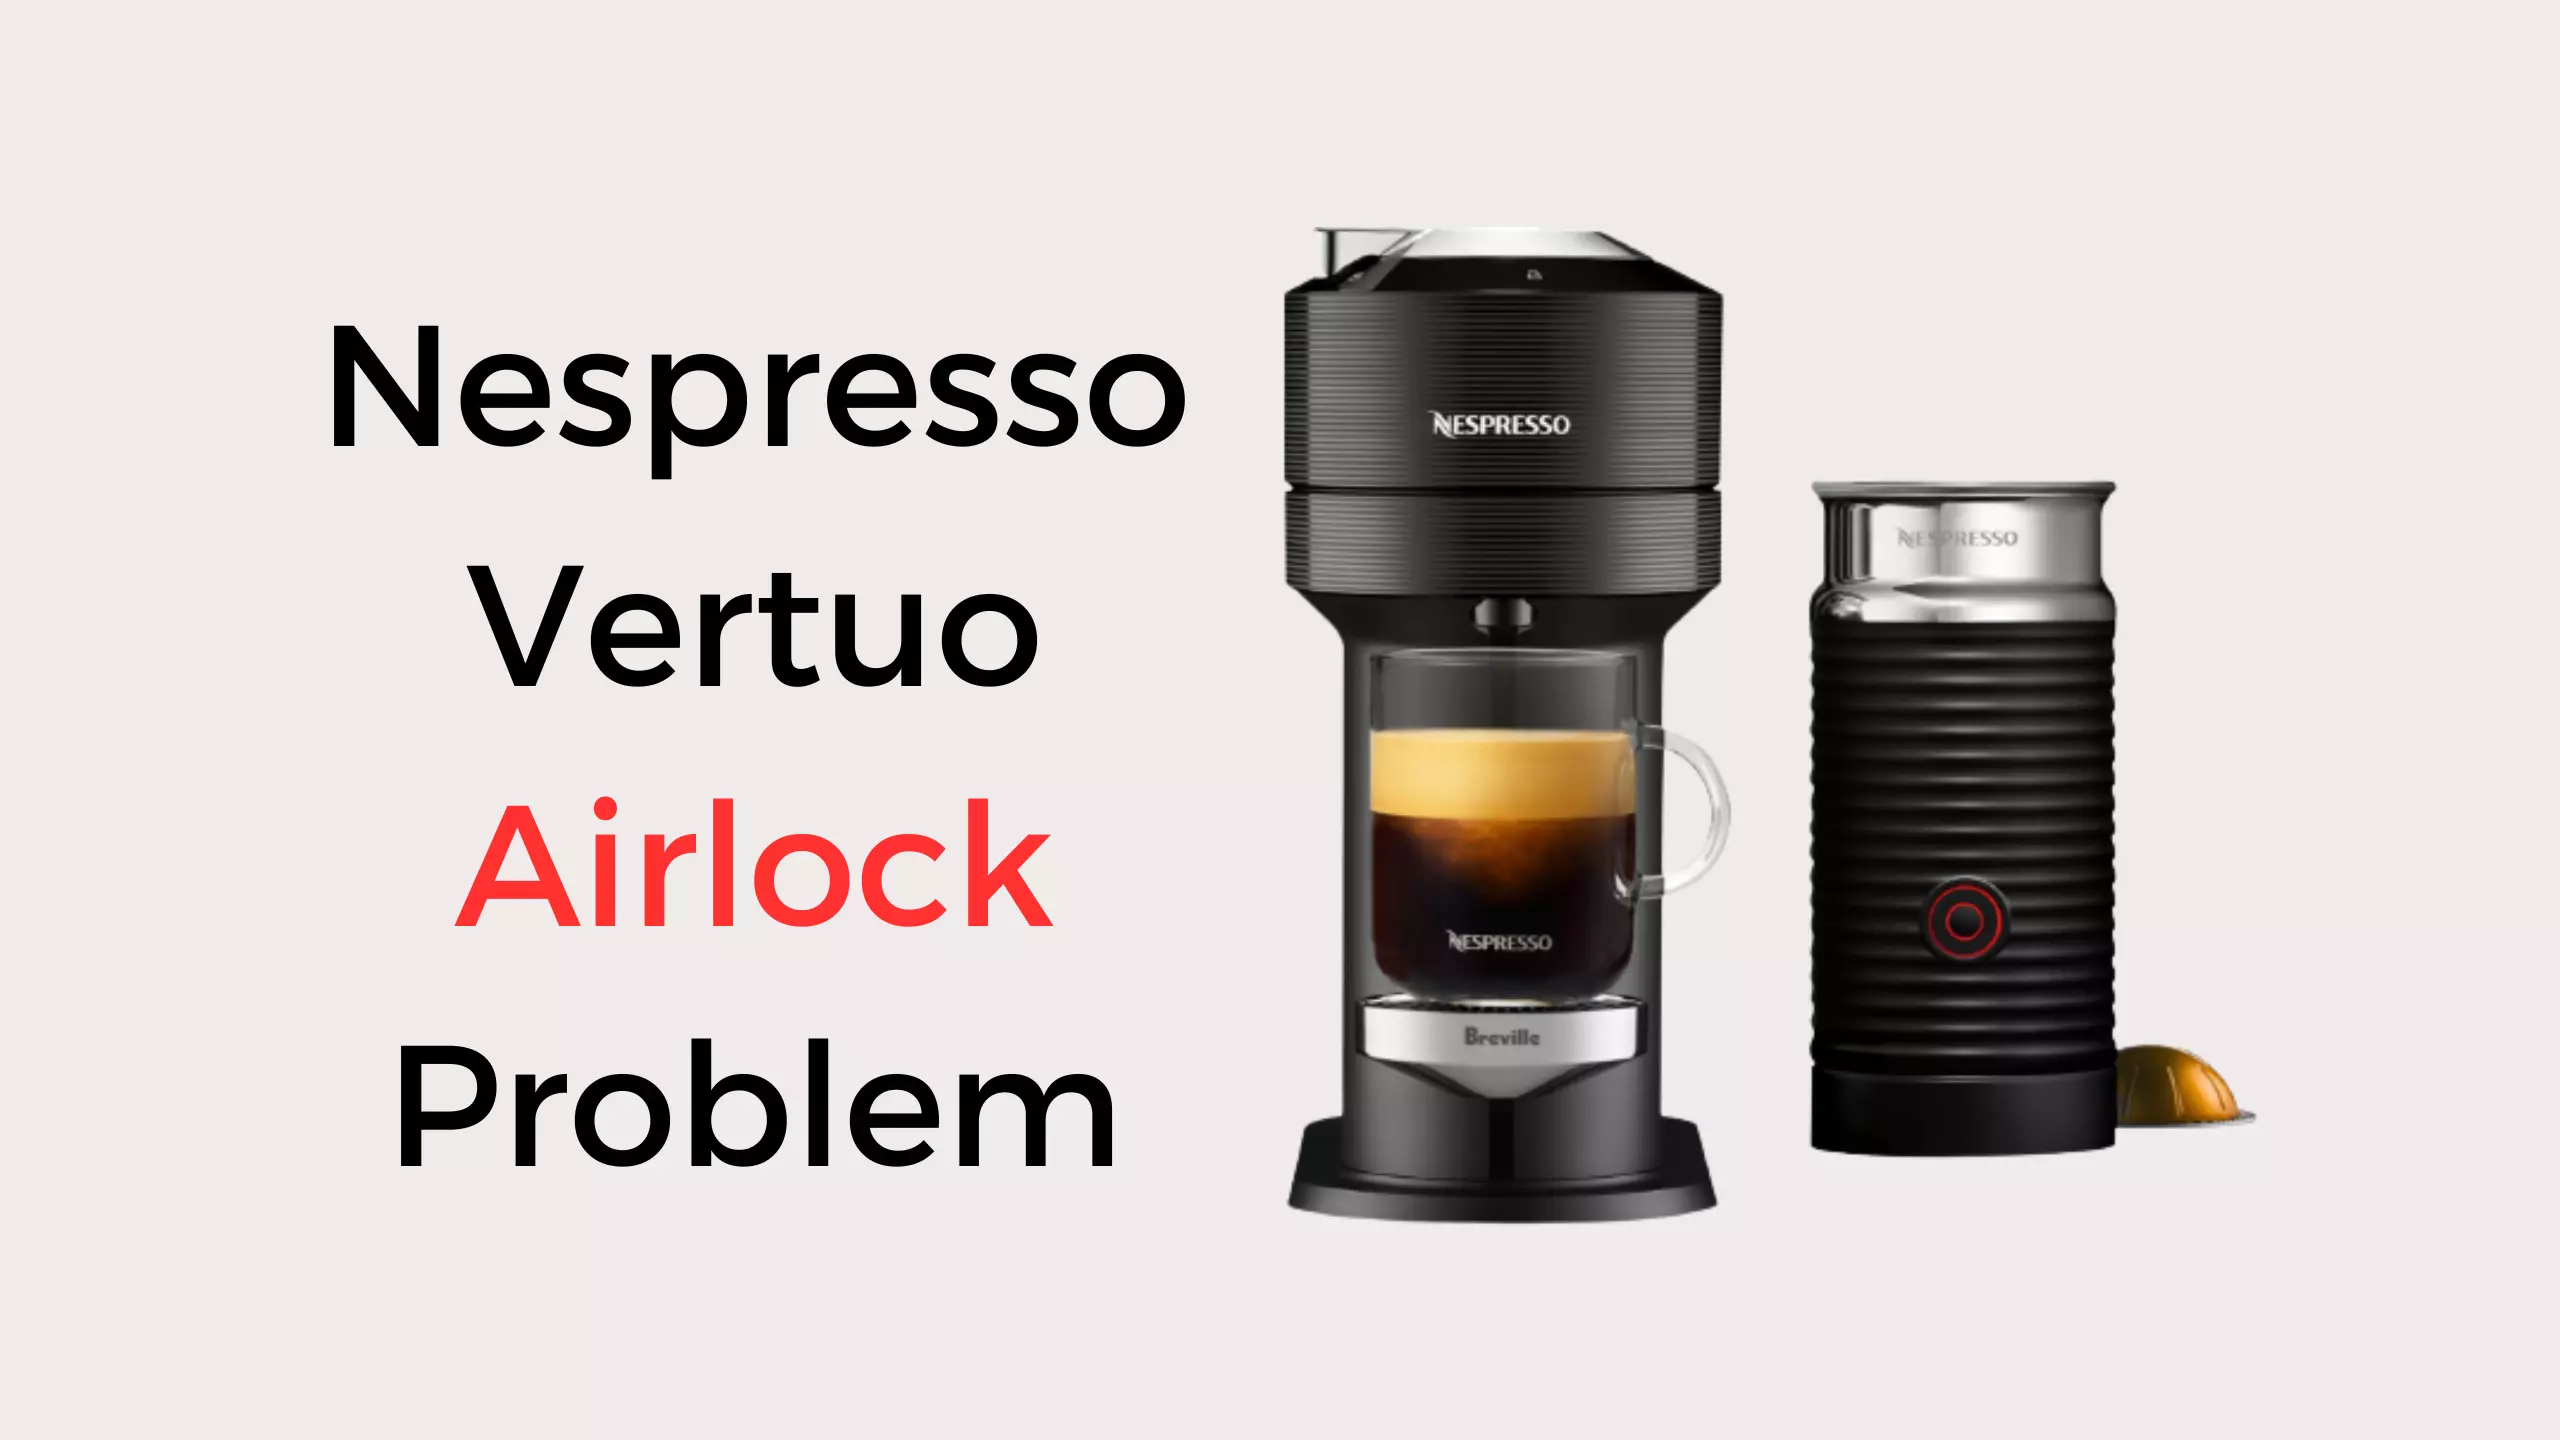 nespresso vertuo airlock problem